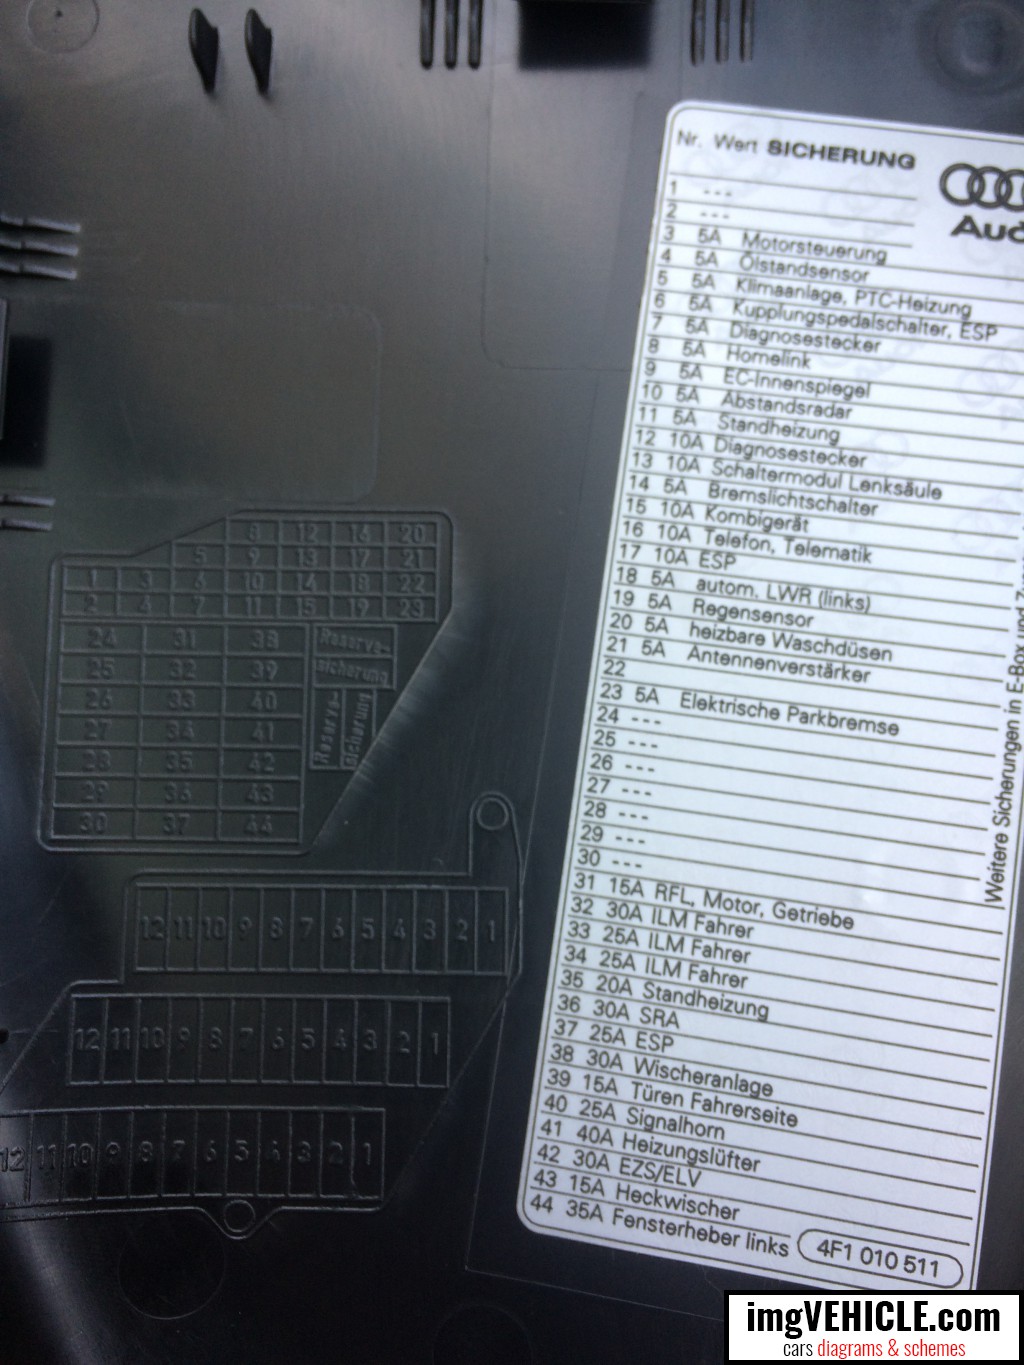 2004 Audi A4 Fuse Box Diagram - Fuse & Wiring Diagram